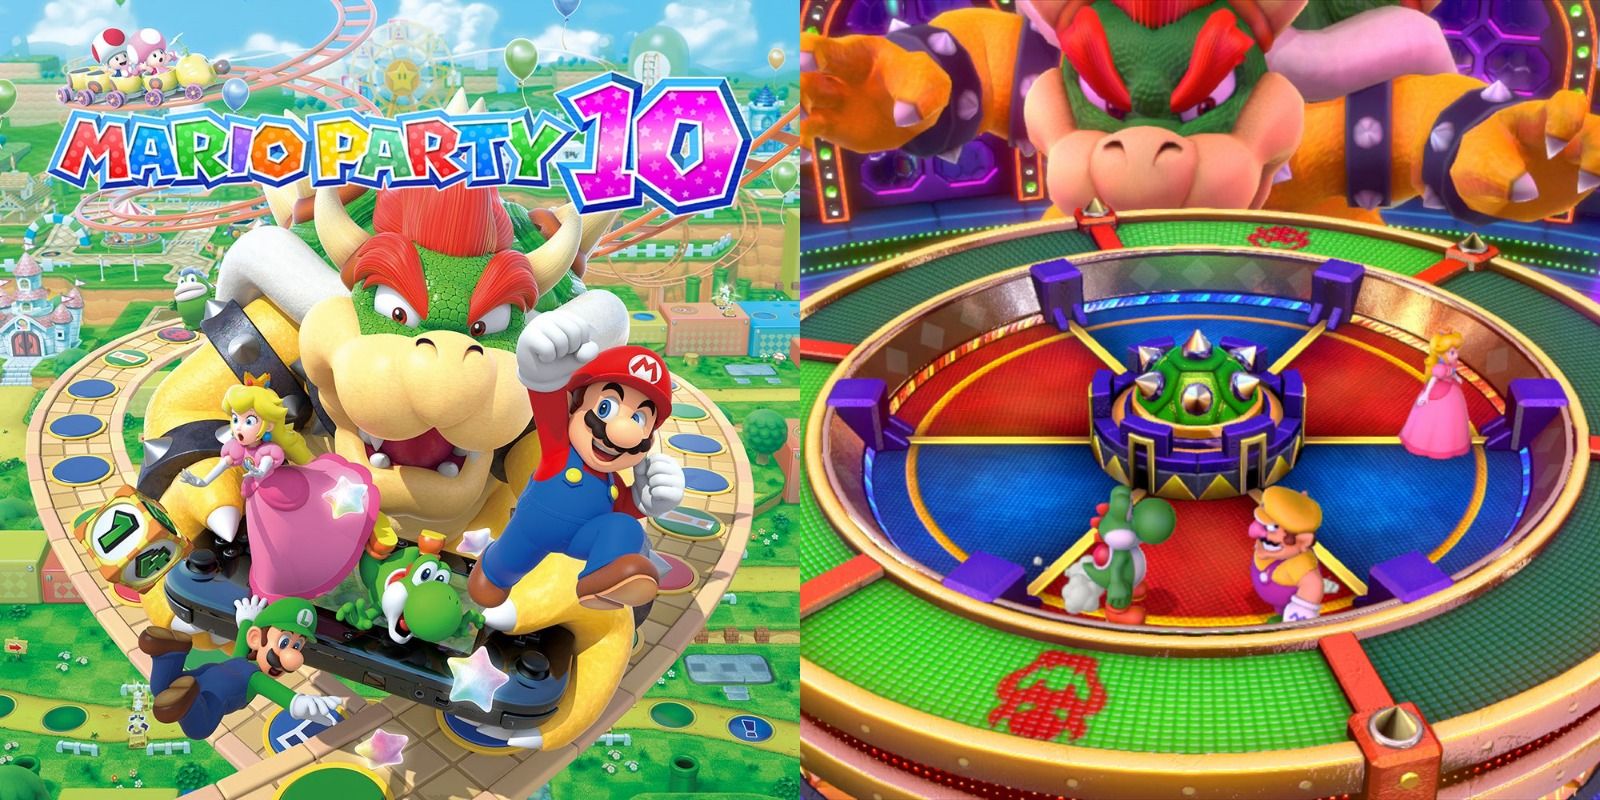 Mario Party 10 for the Nintendo Wii U